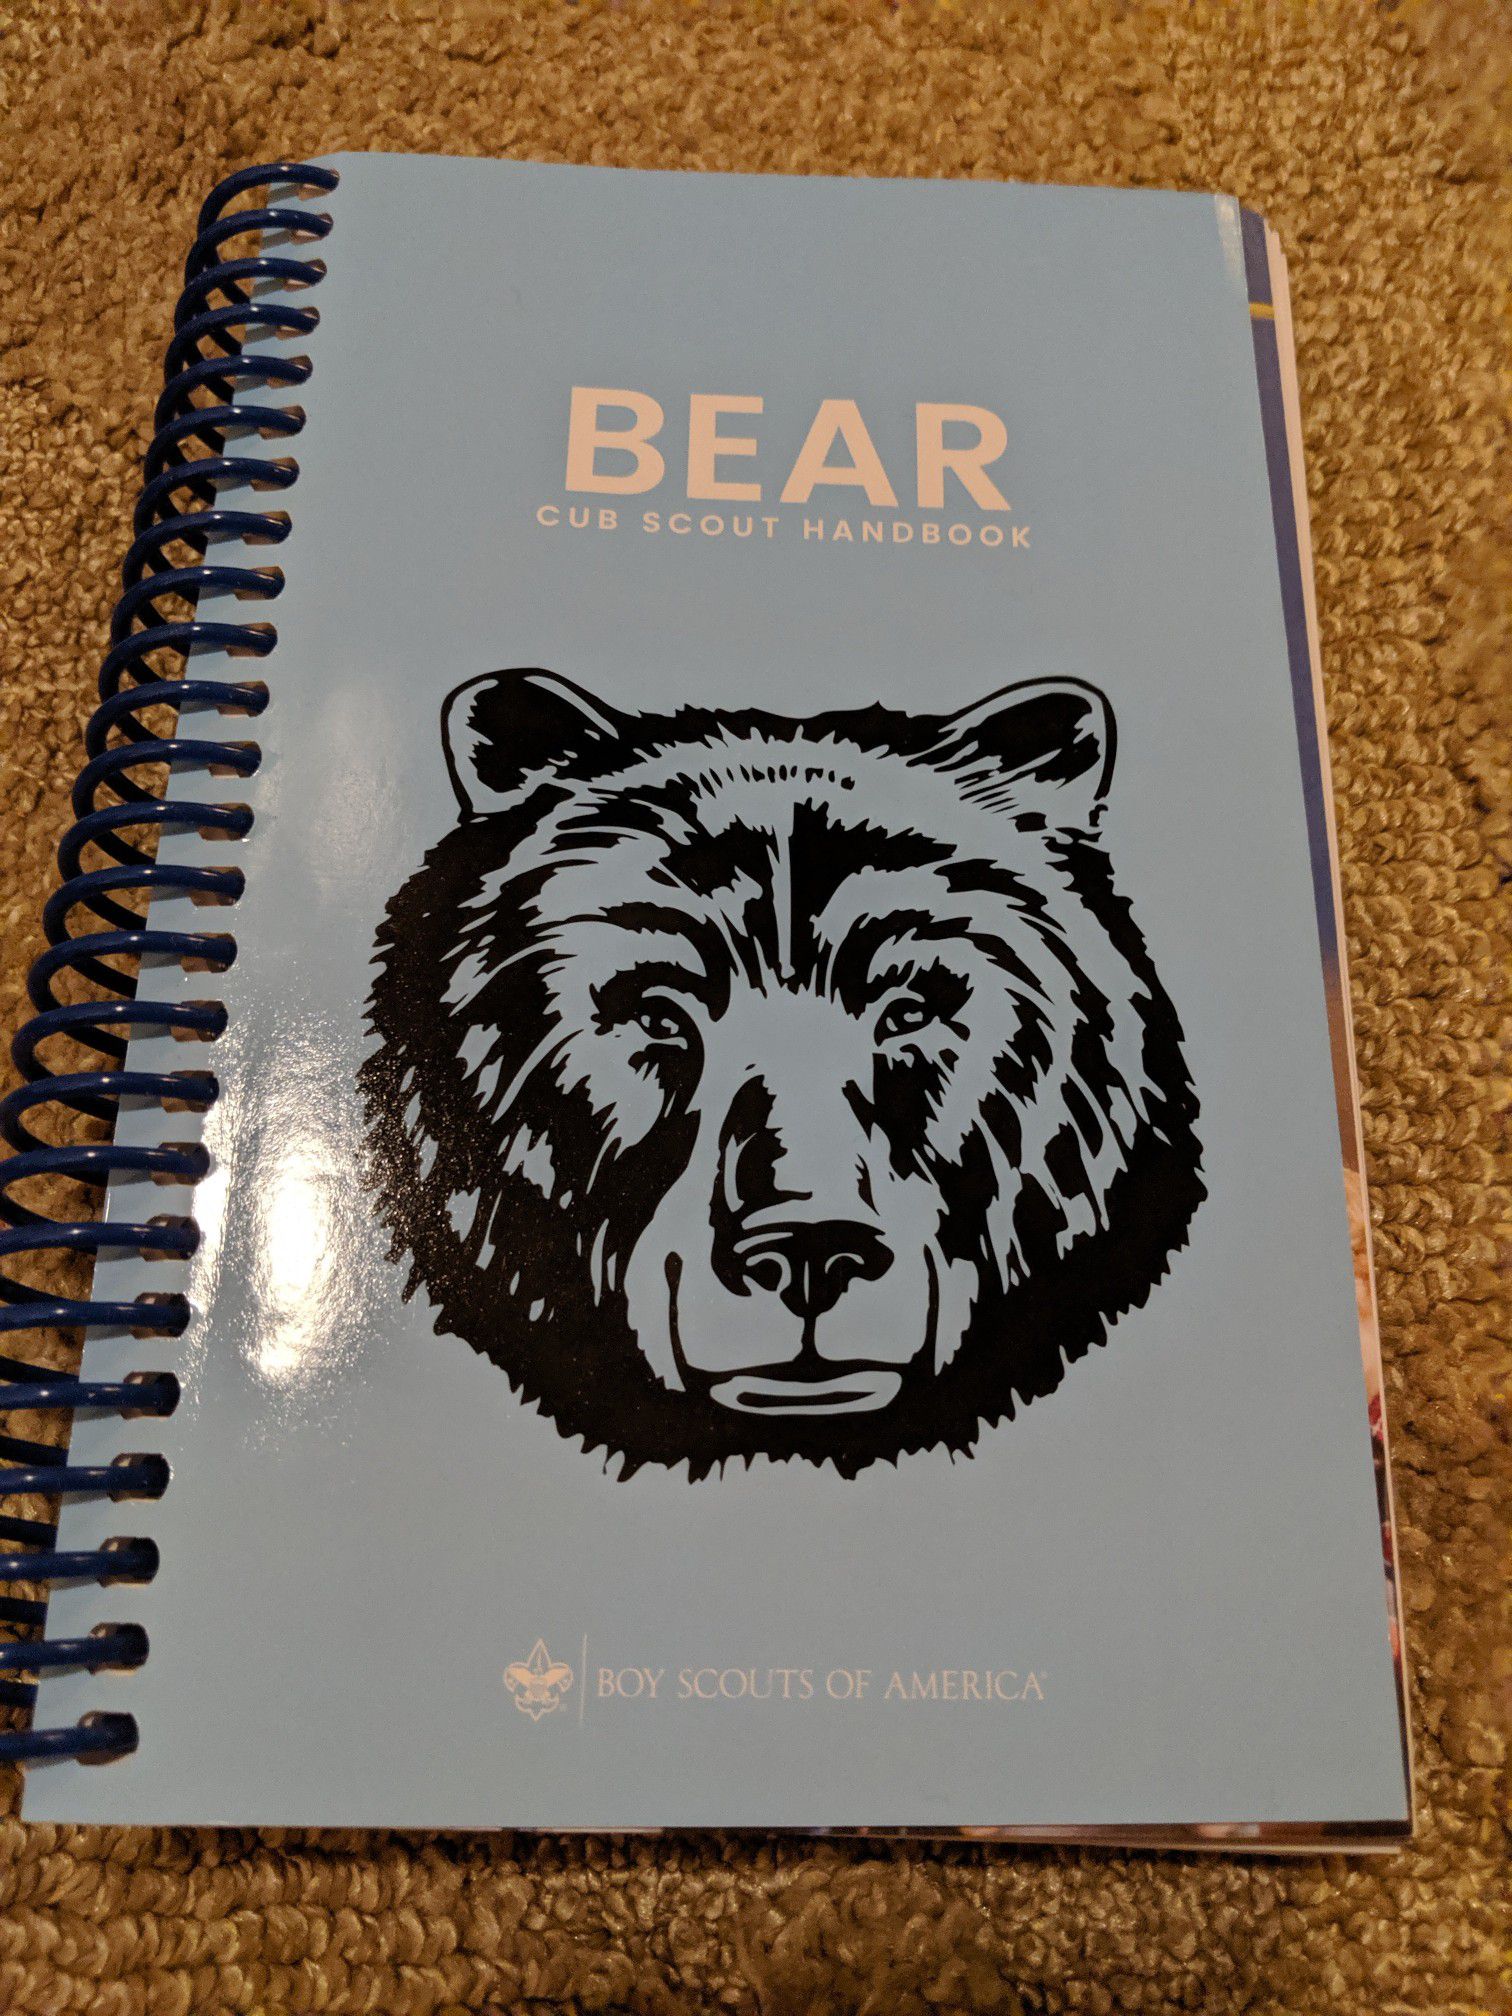 Cub Scouts Bear Handbook, 2018 Printing